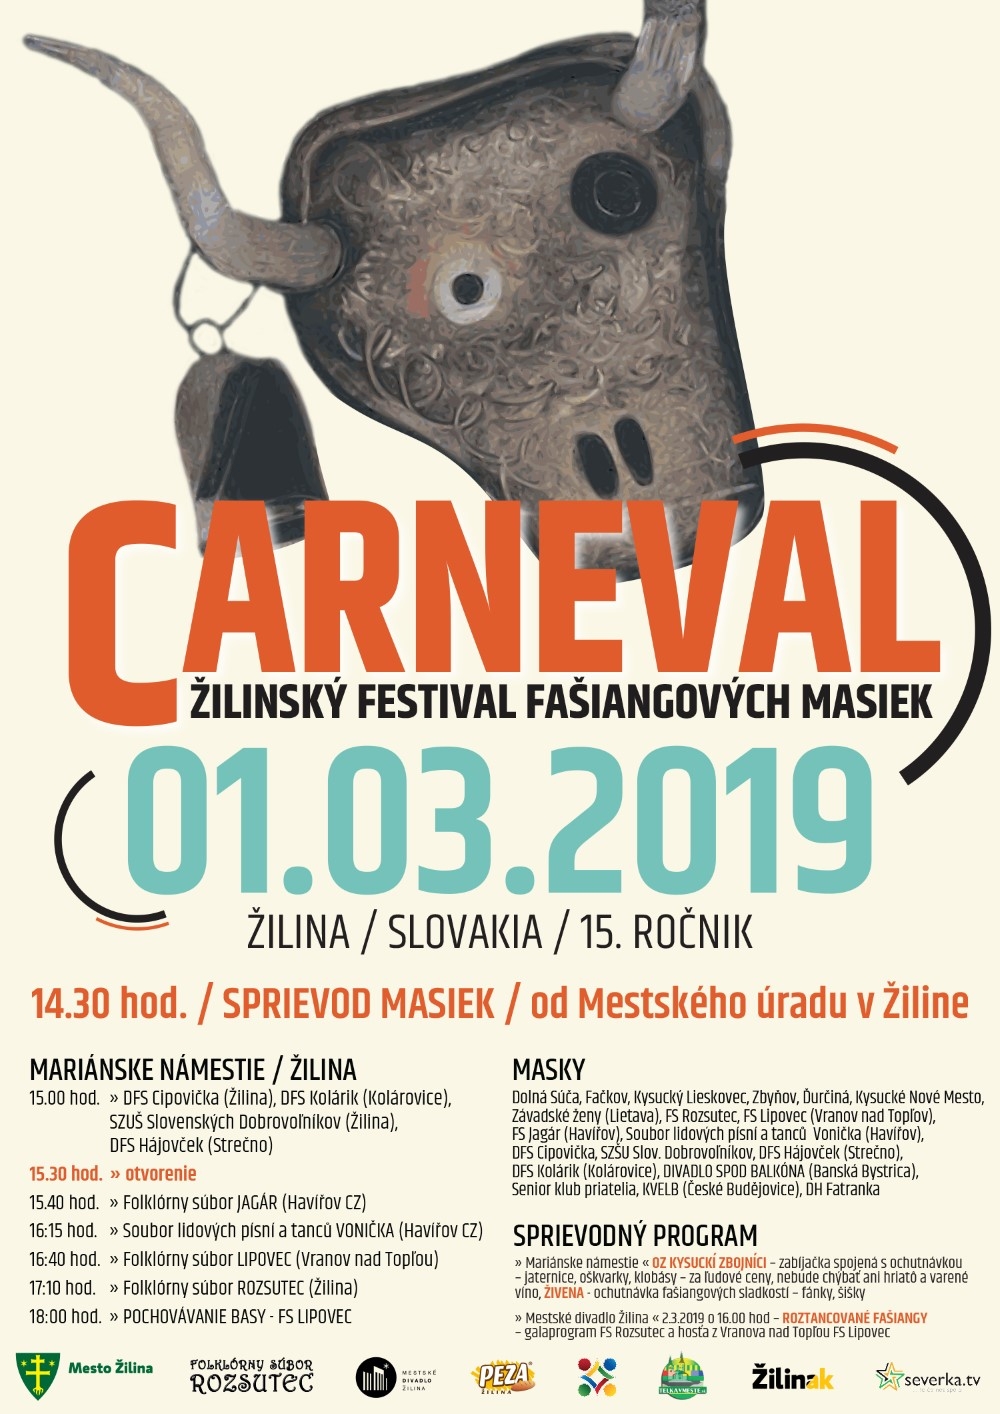 Carneval ilina 2019 - 15. ronk ilinskho  karnevalu faiangovch masiek